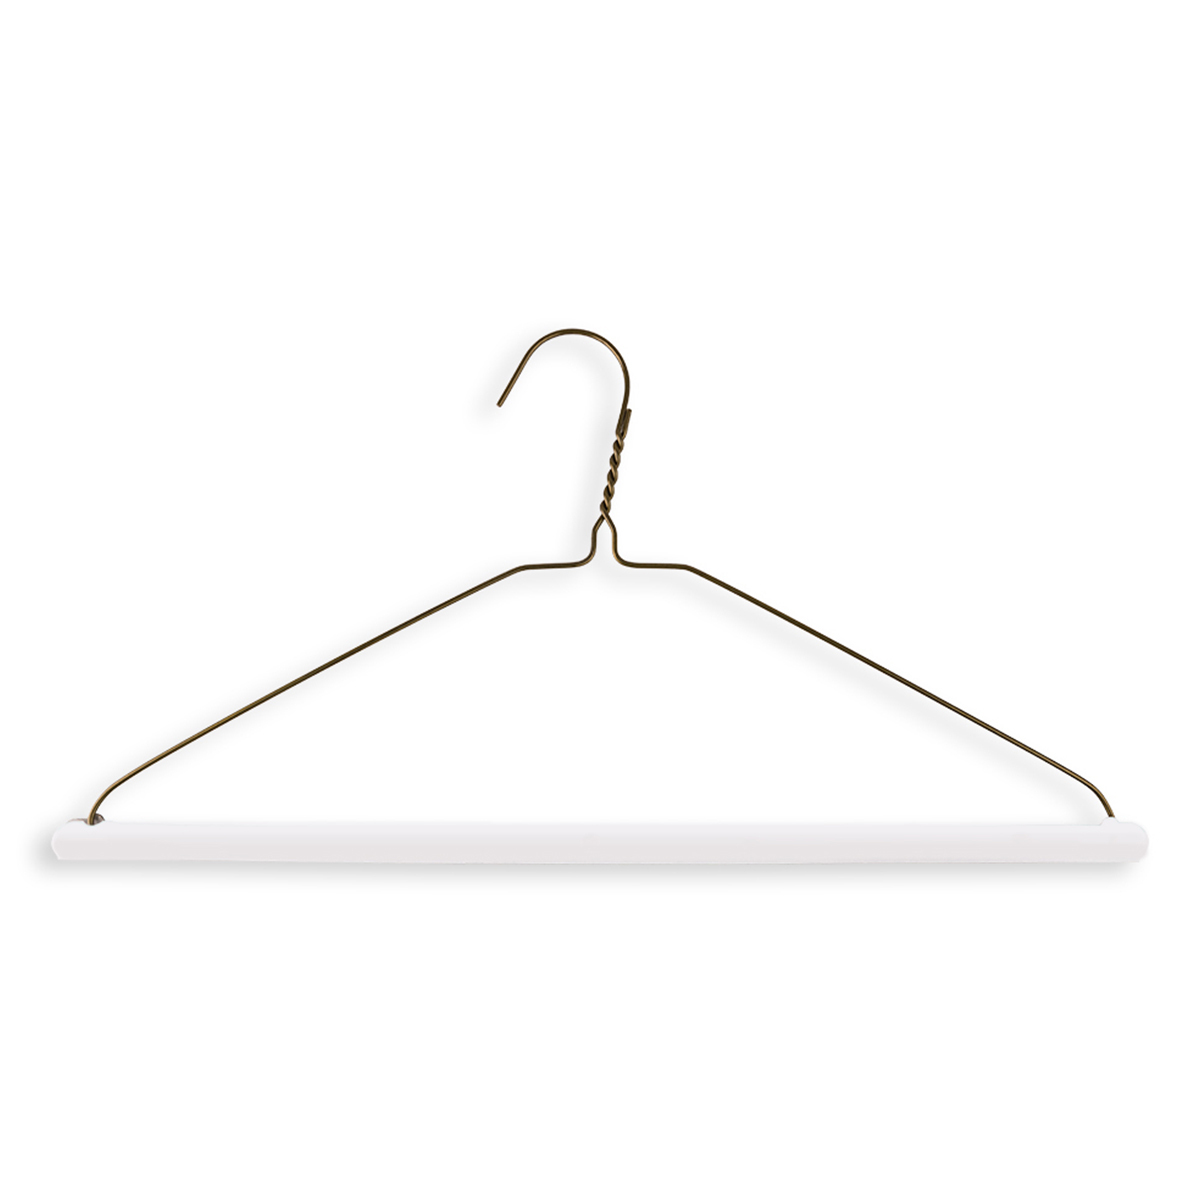 WAWAK Commercial Grade Metal Shirt Hangers - 18 Length/ 14.5 Gauge - 100/Box  - White - WAWAK Sewing Supplies